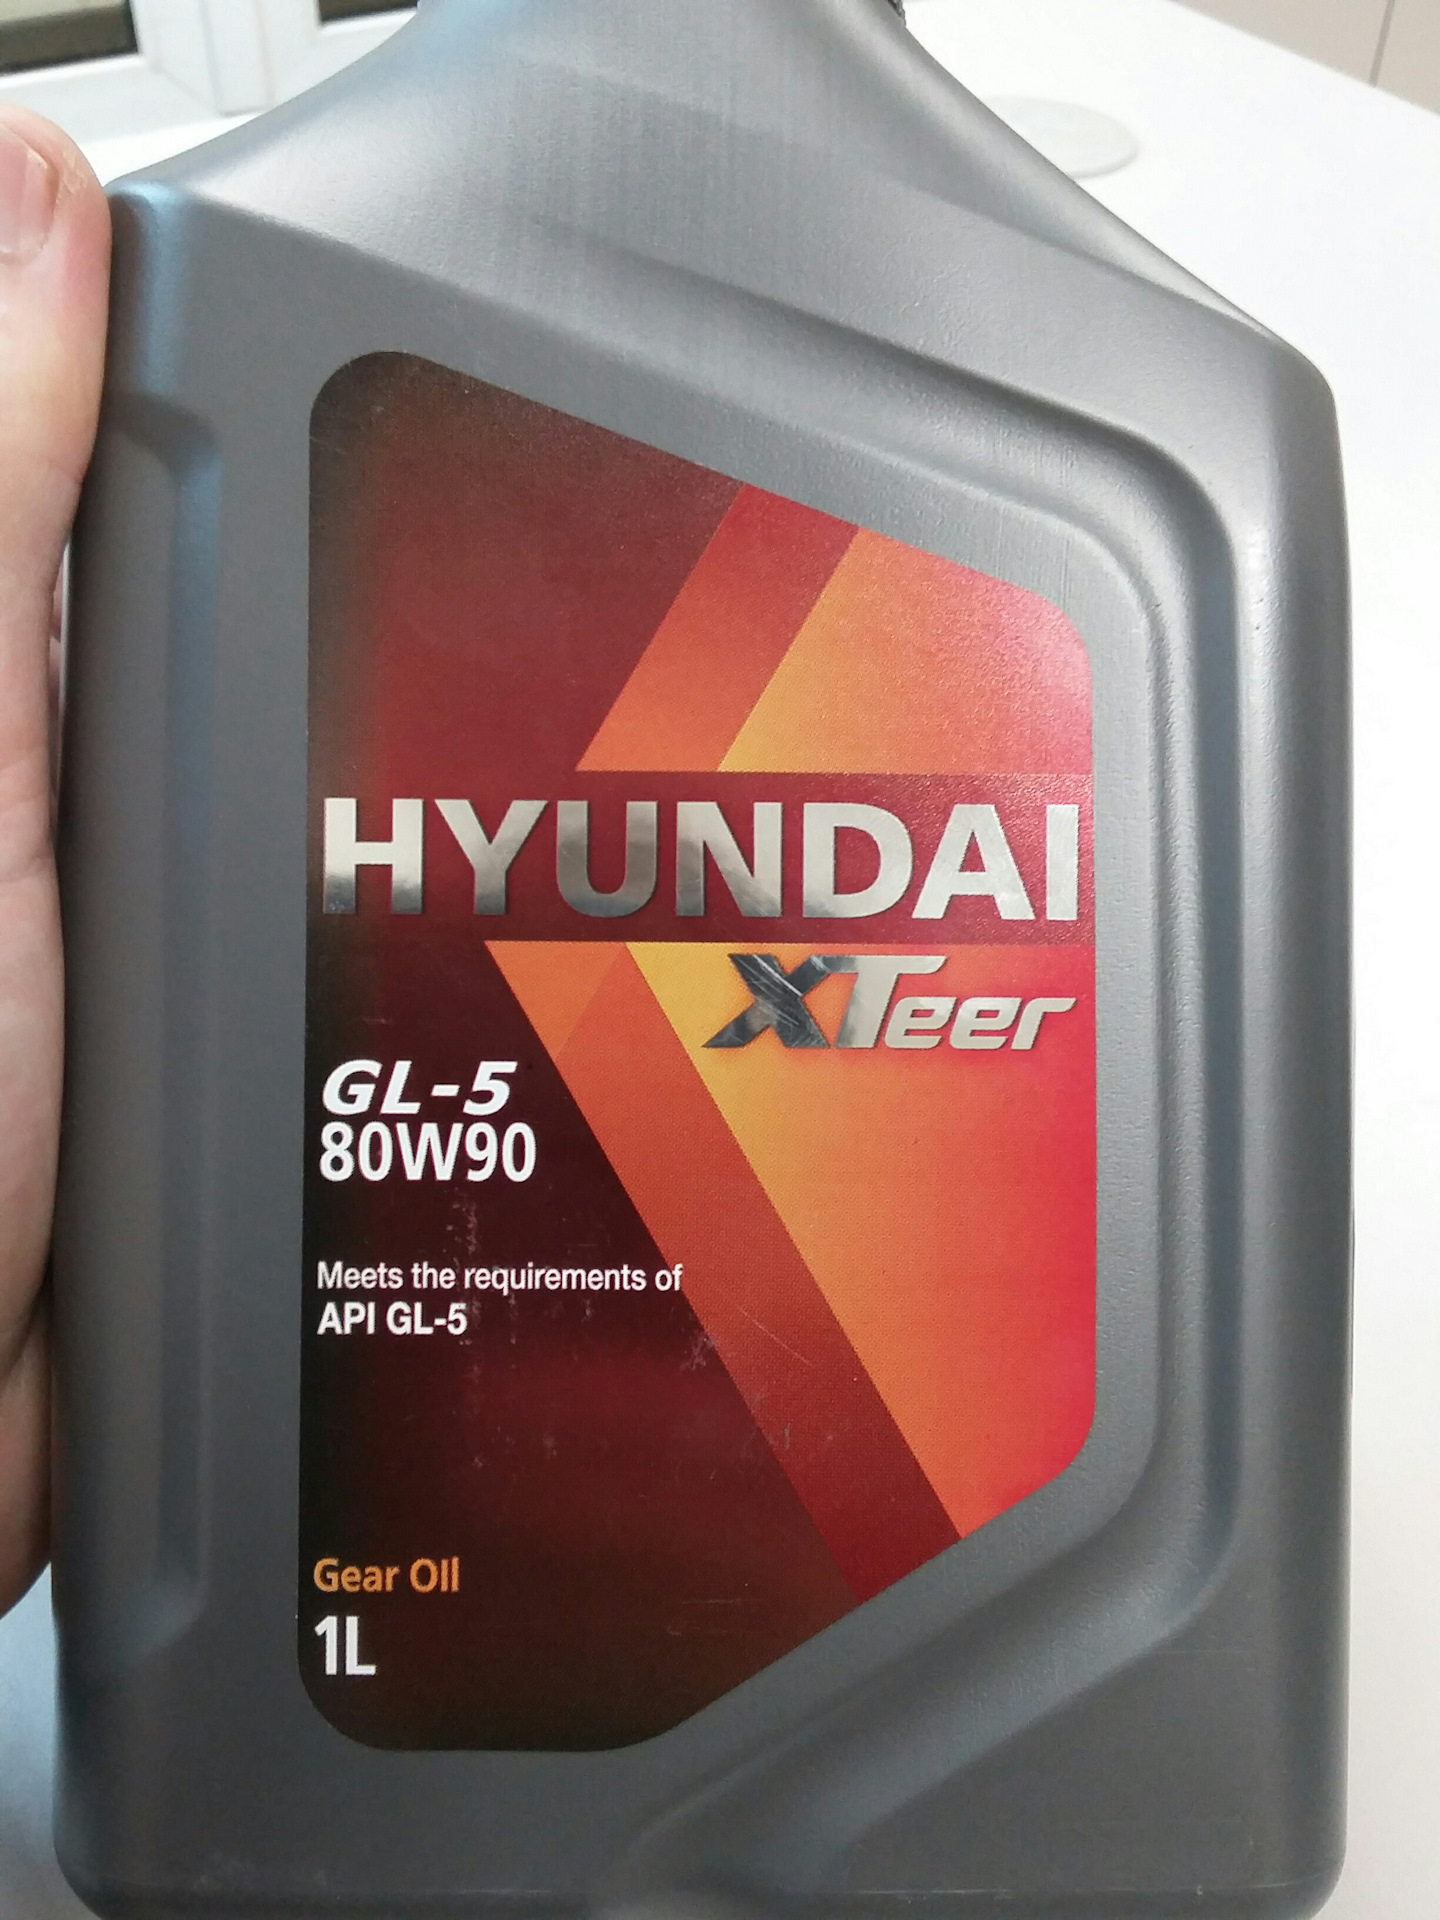 Hyundai xteer артикул. Hyundai XTEER : 1011017. Hyundai XTEER Gear Oil-4 75w90. Hyundai XTEER 75w90 gl5. Hyundai XTEER Gear Oil-5 75w90.